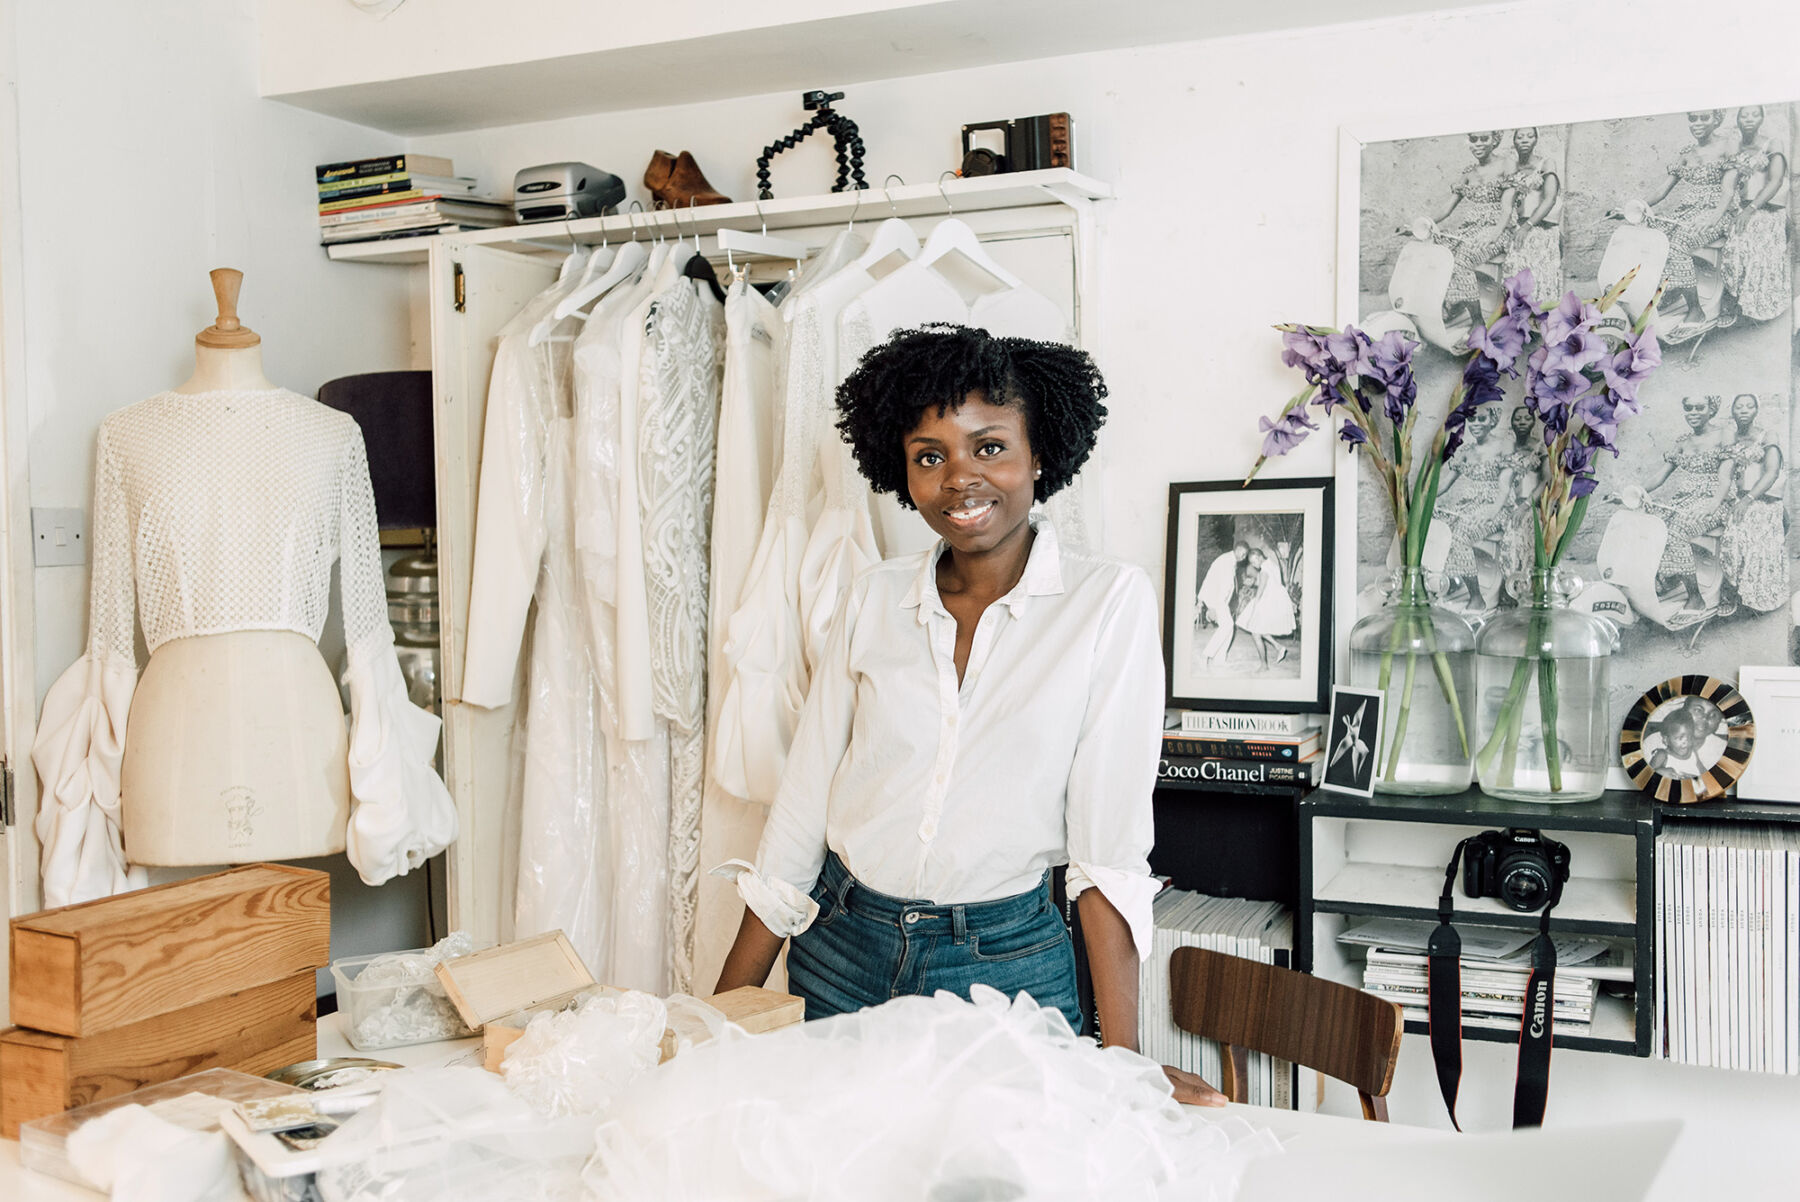 An Interview With Rita Colson, London Bridal Fashion Designer